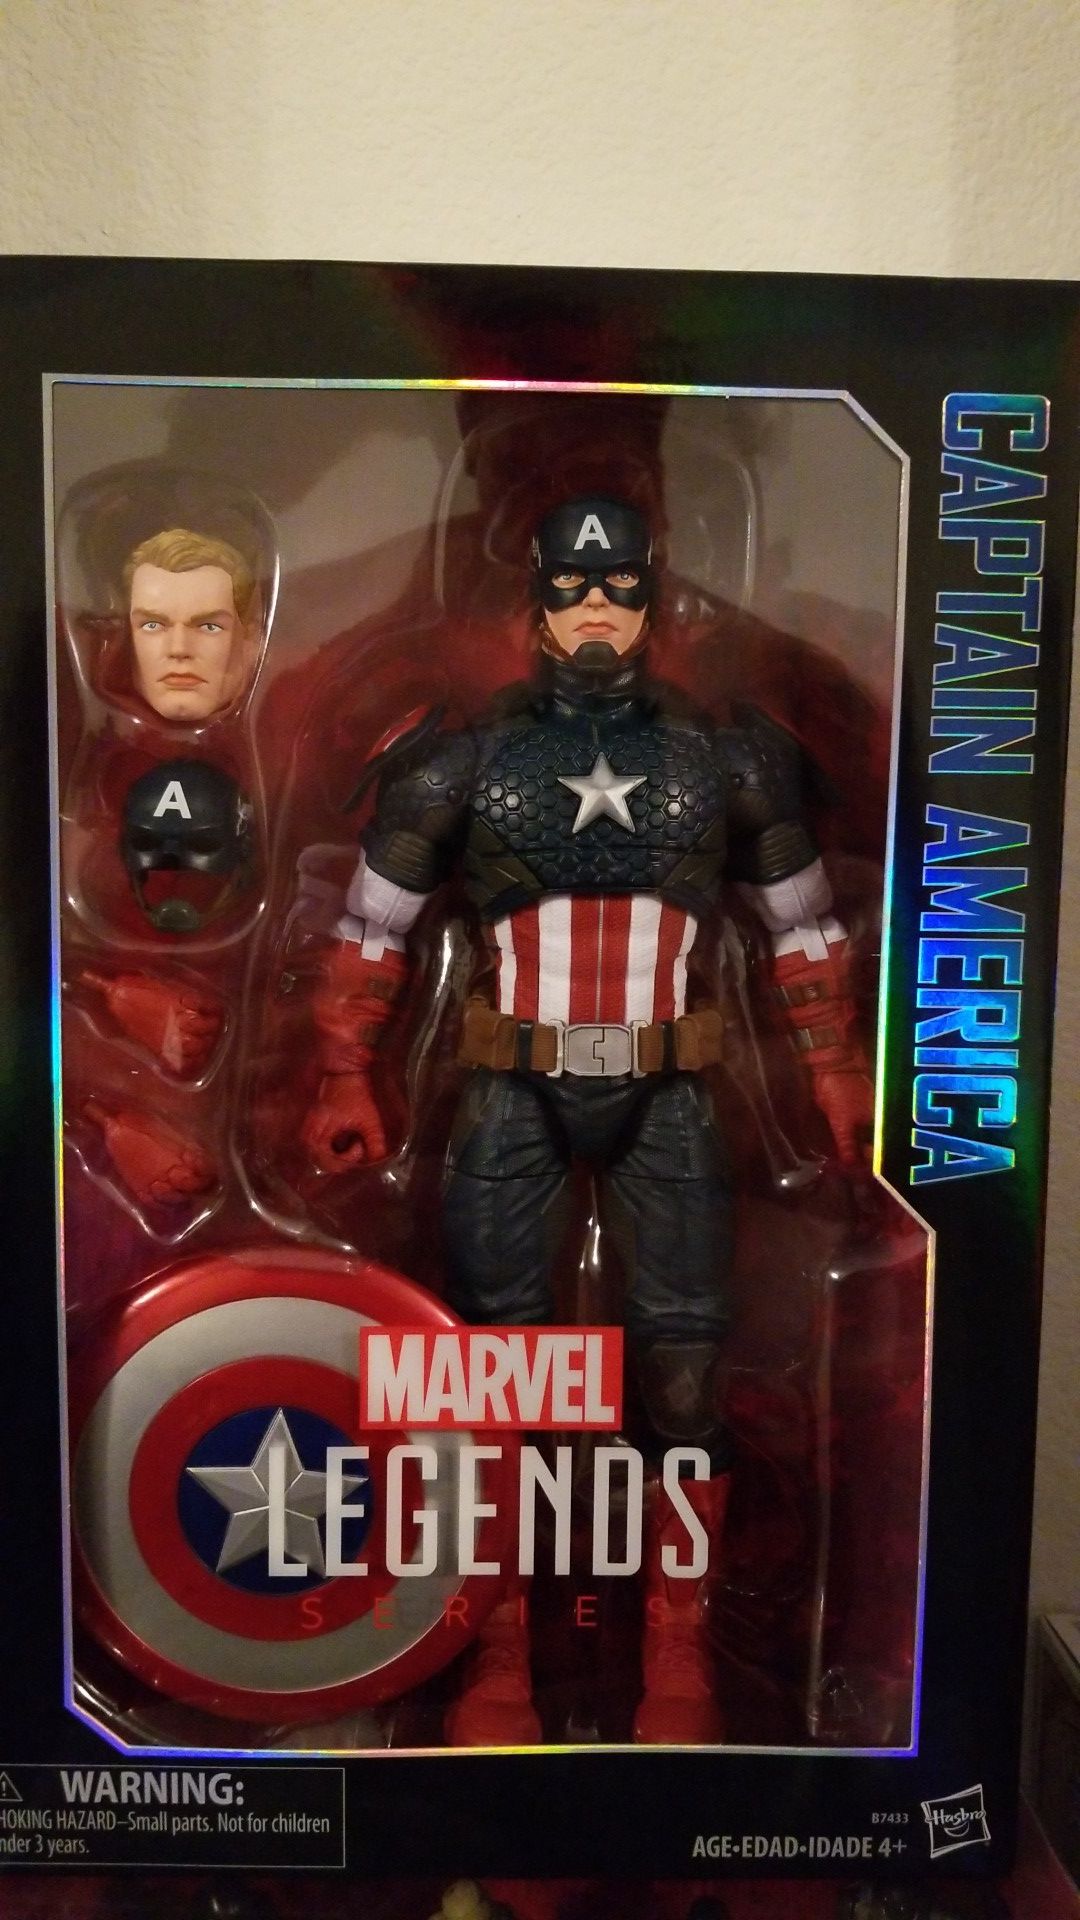 Marvel Legends "Captain America"